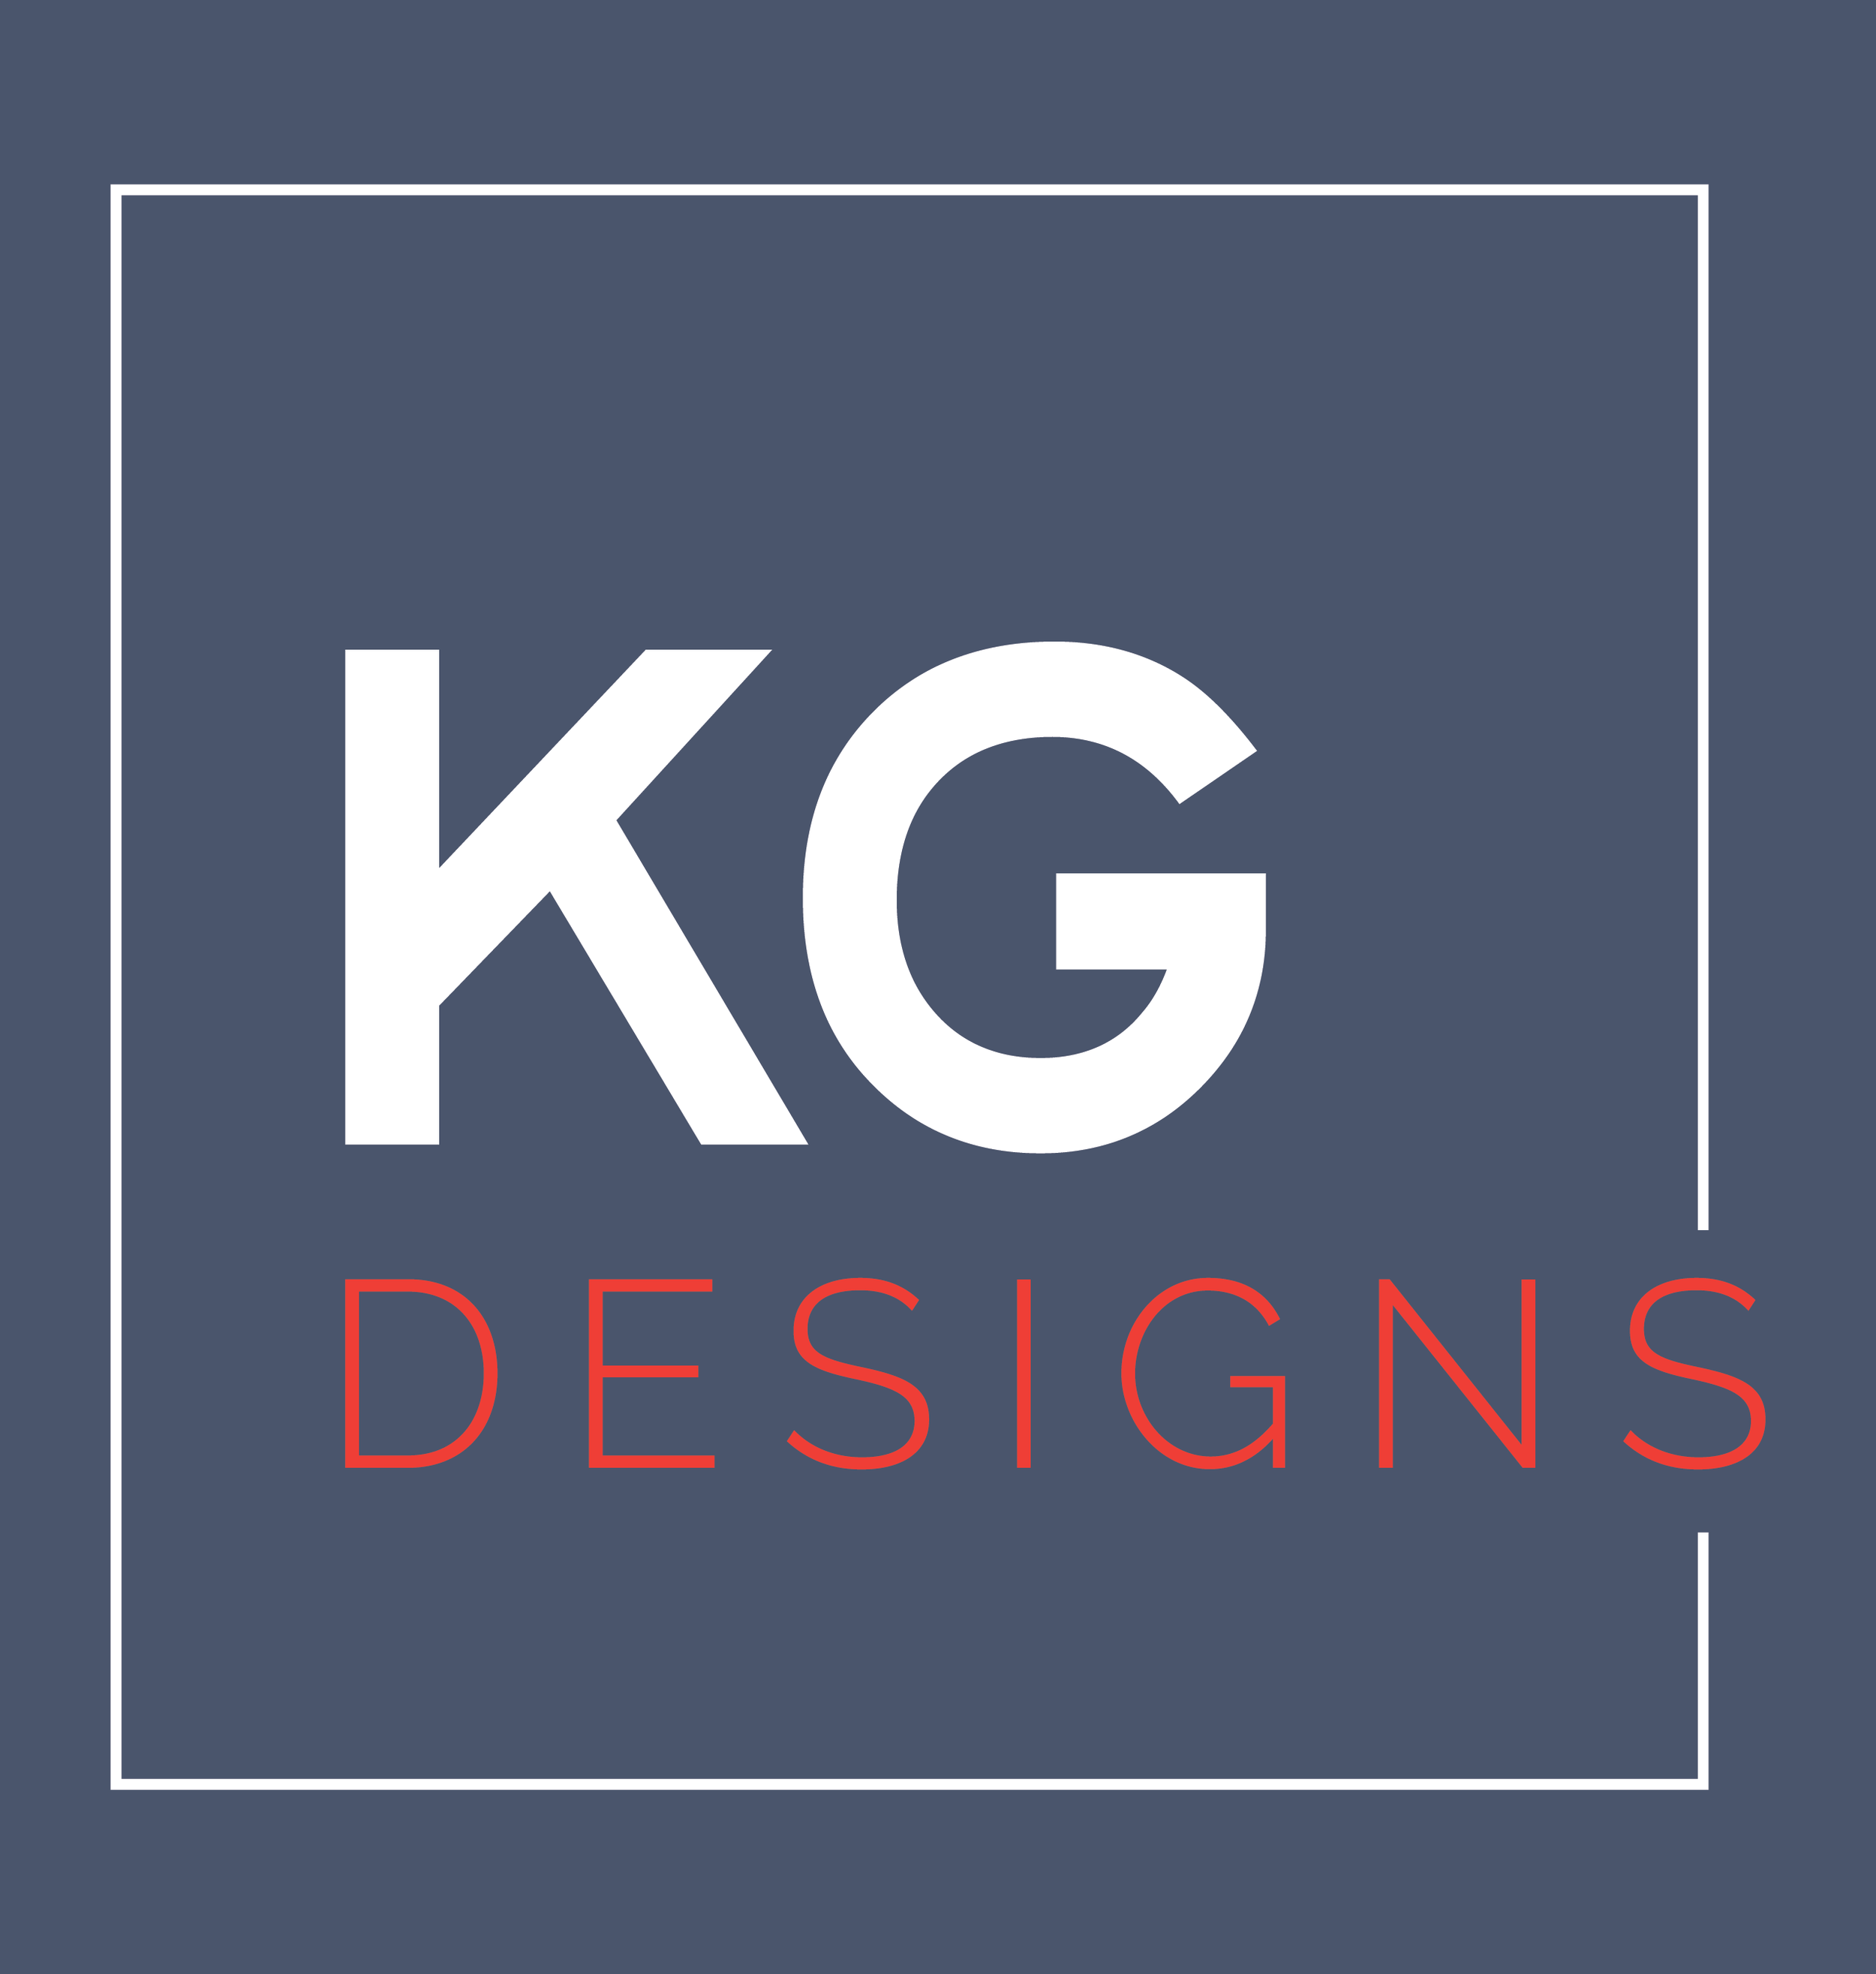 KG Designs